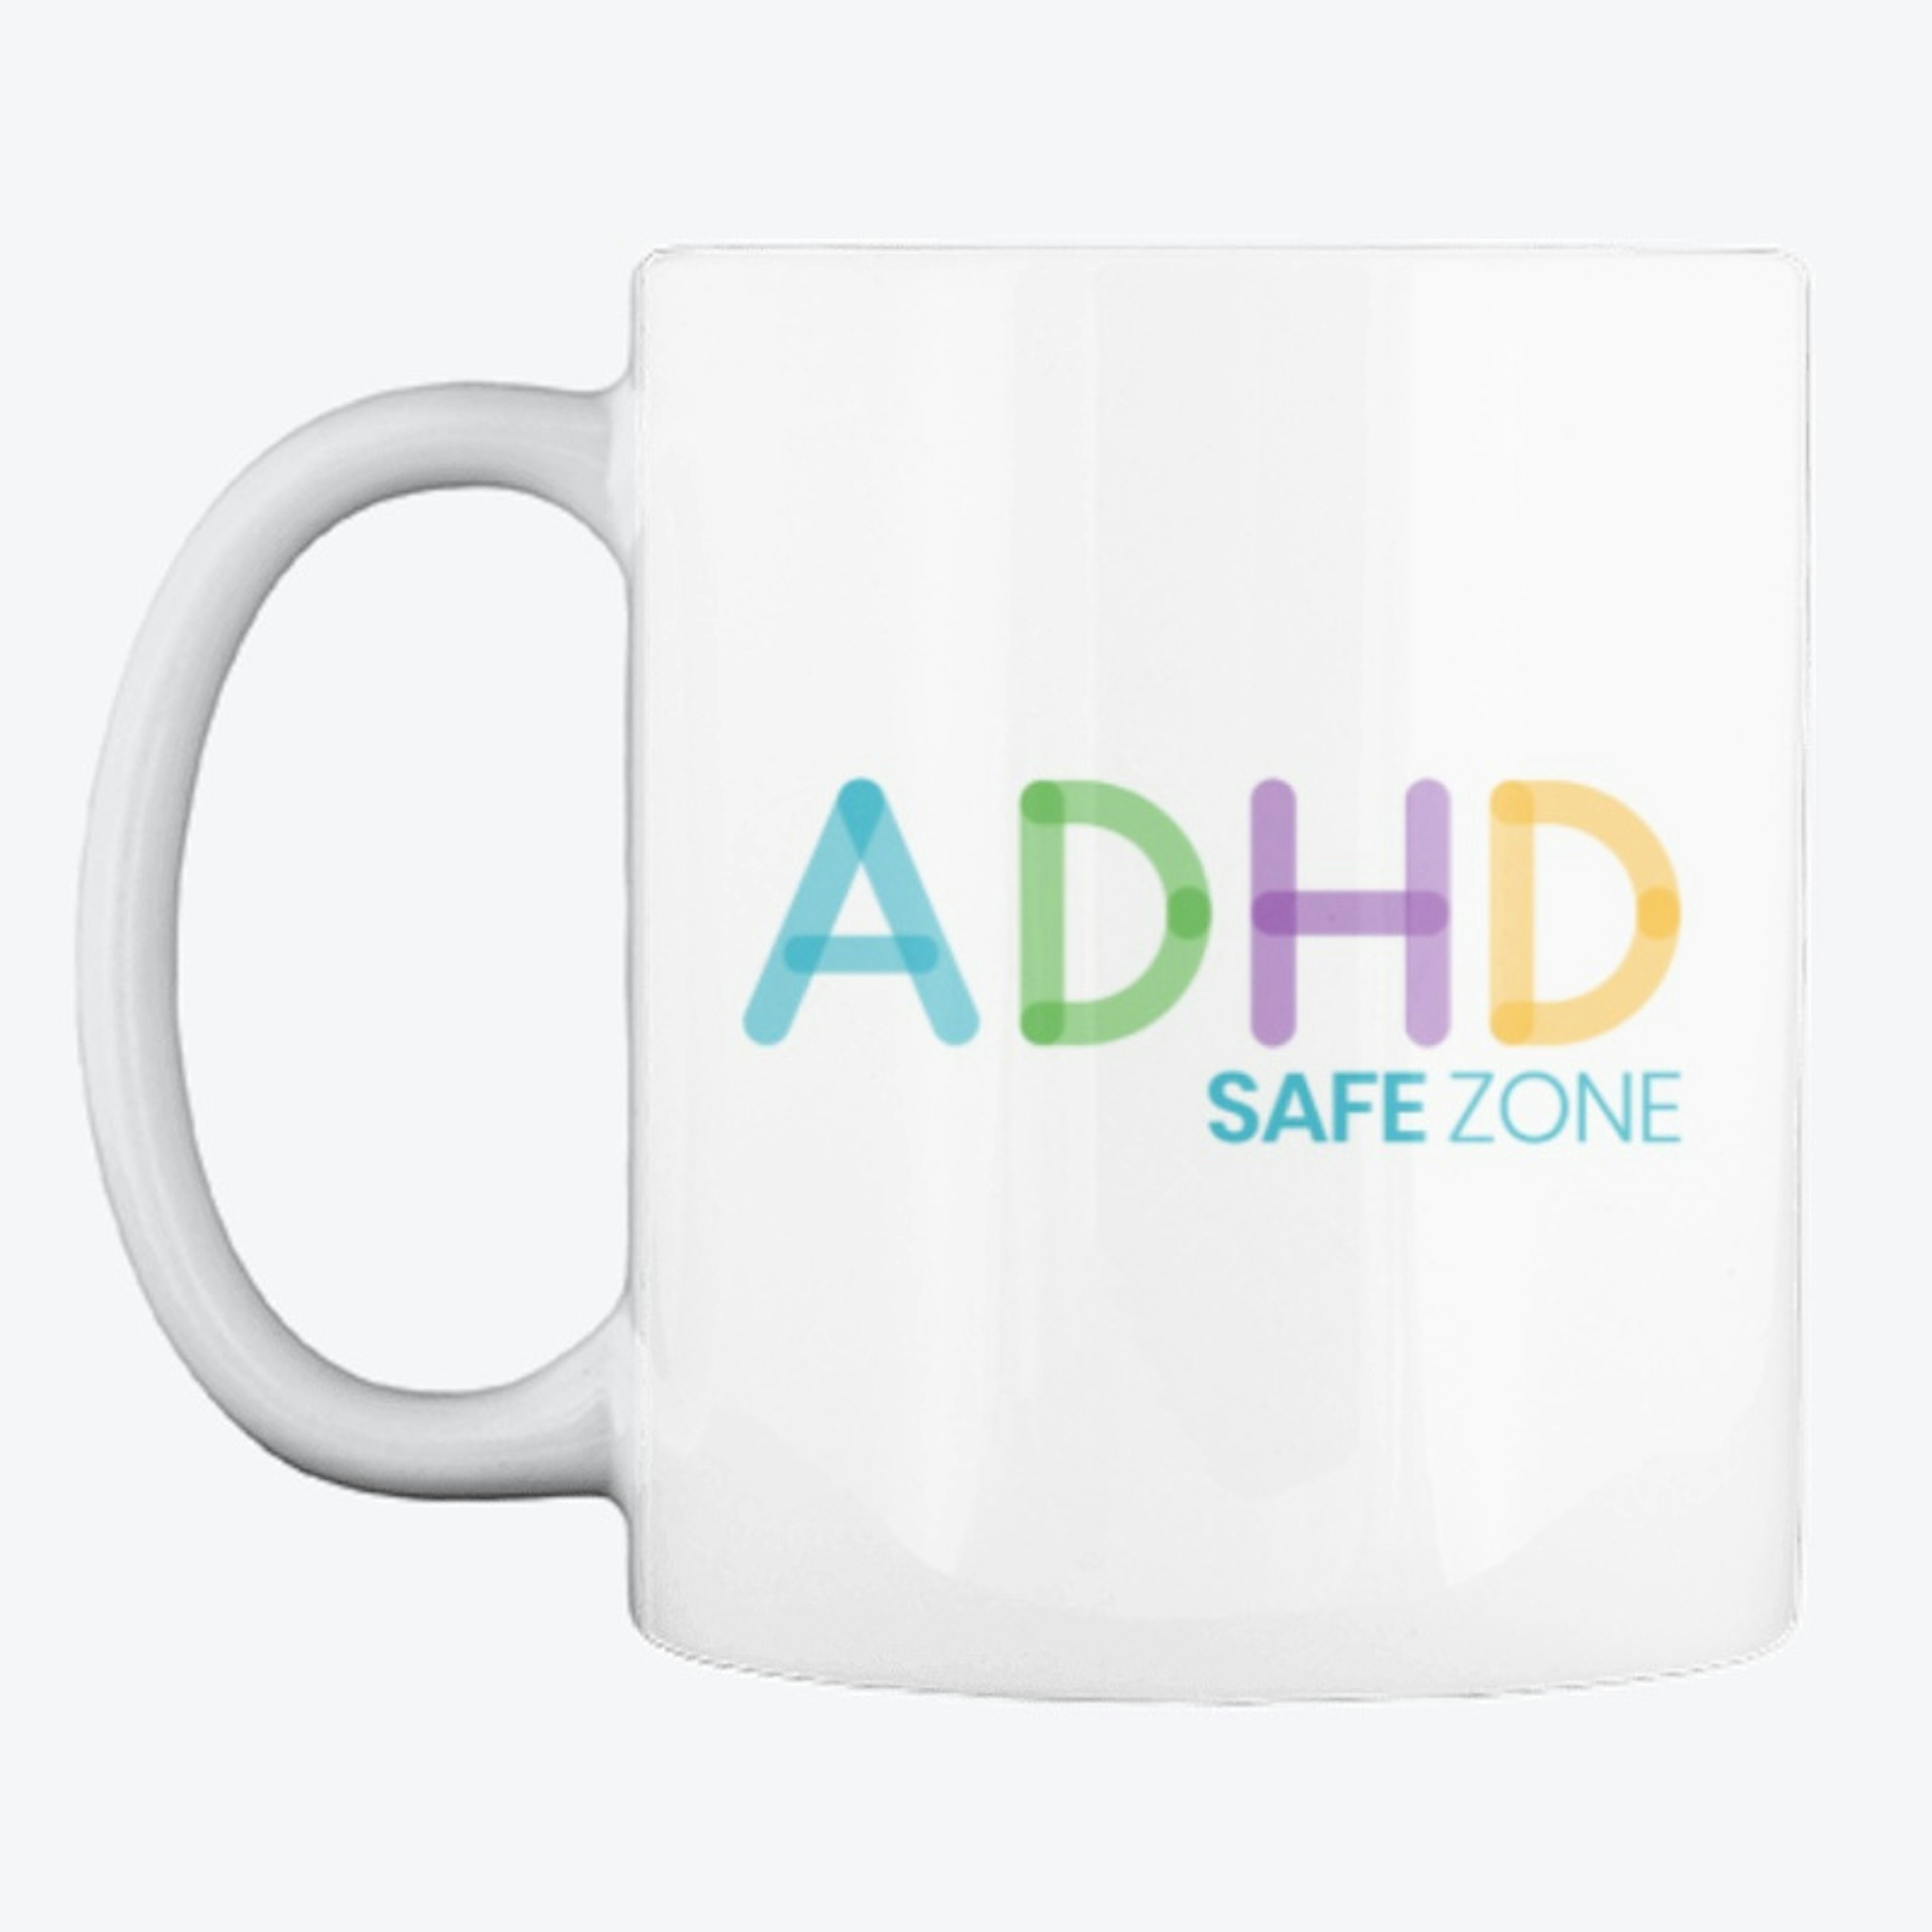 The ADHD Safe Zone Mug